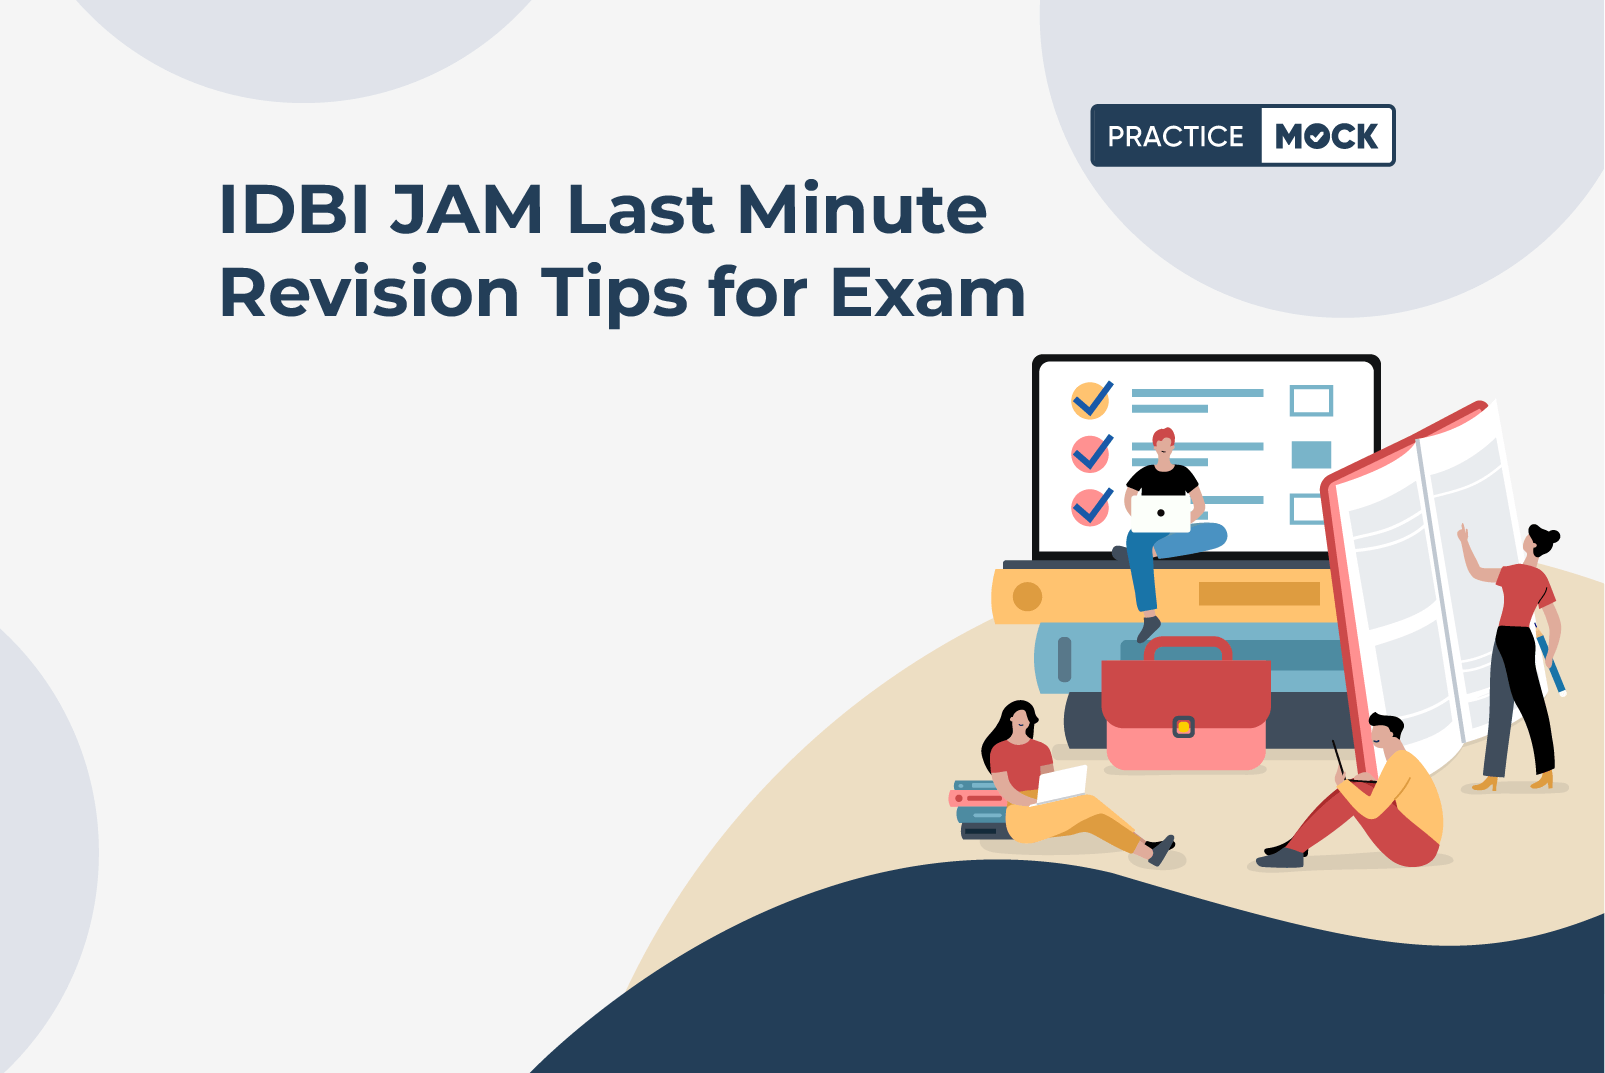 IDBI JAM Last Minute Revision Tips for Exam